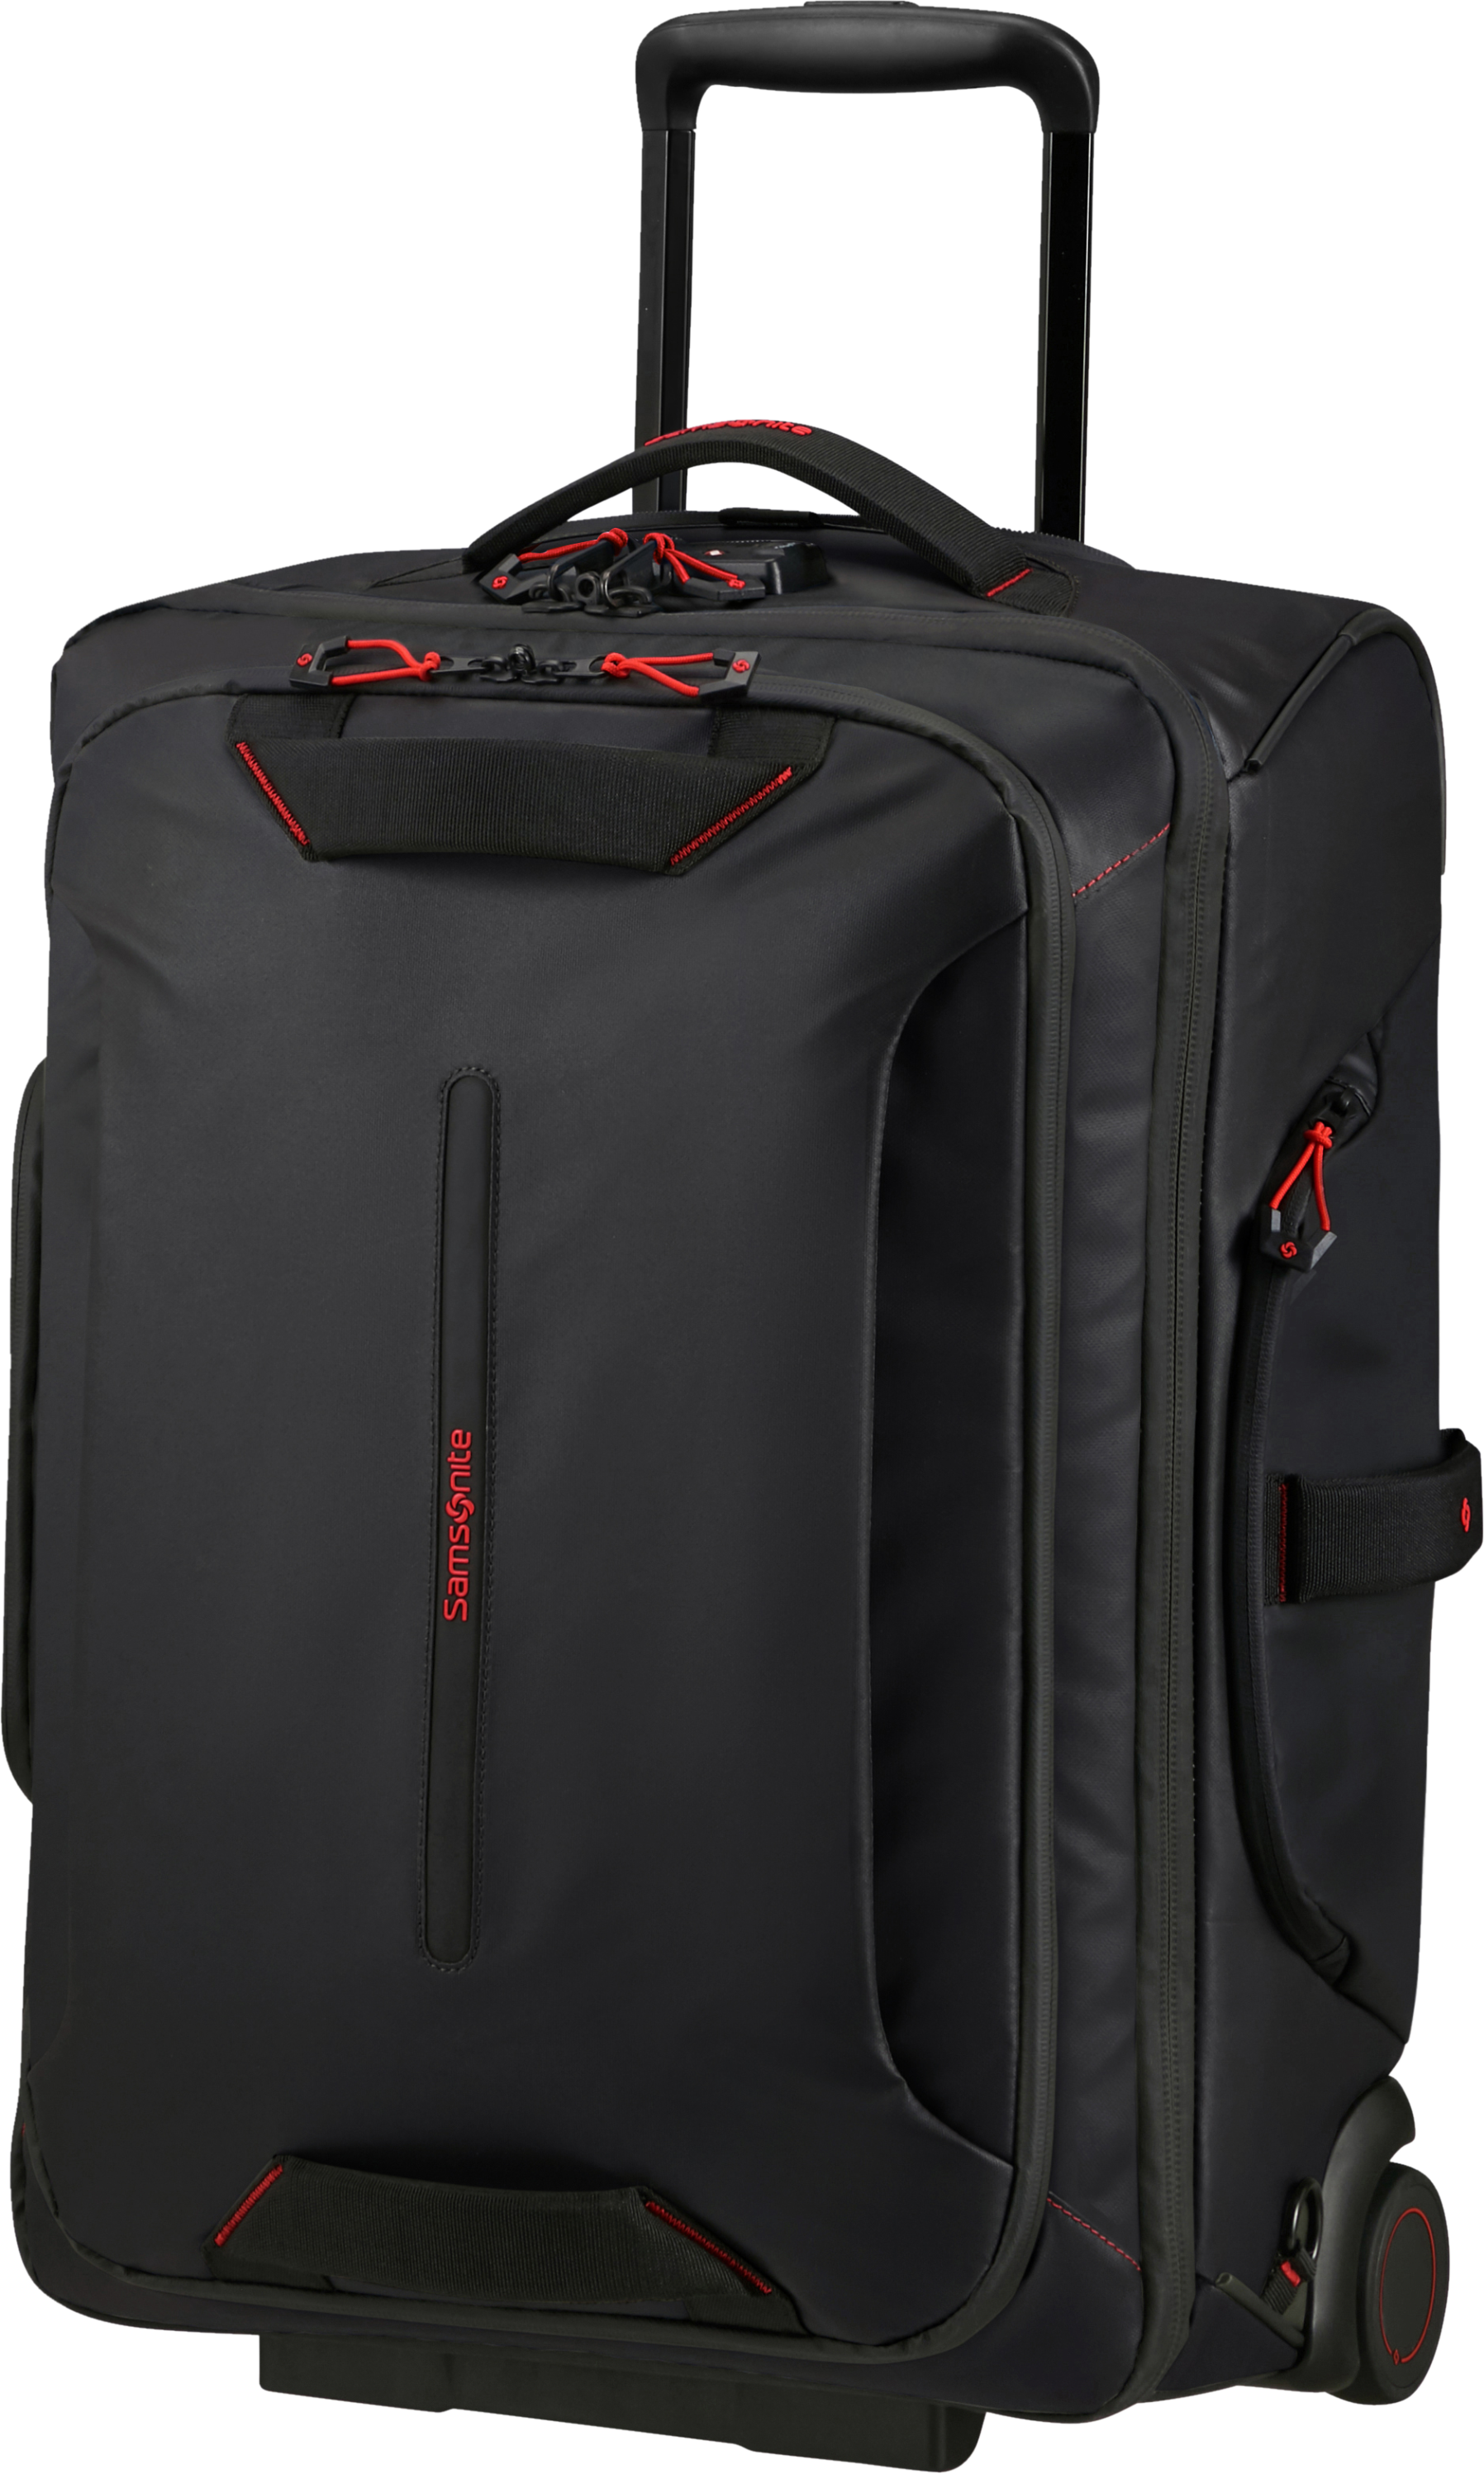 Samsonite Ecodiver Duffle with wheels 55cm backpack Black